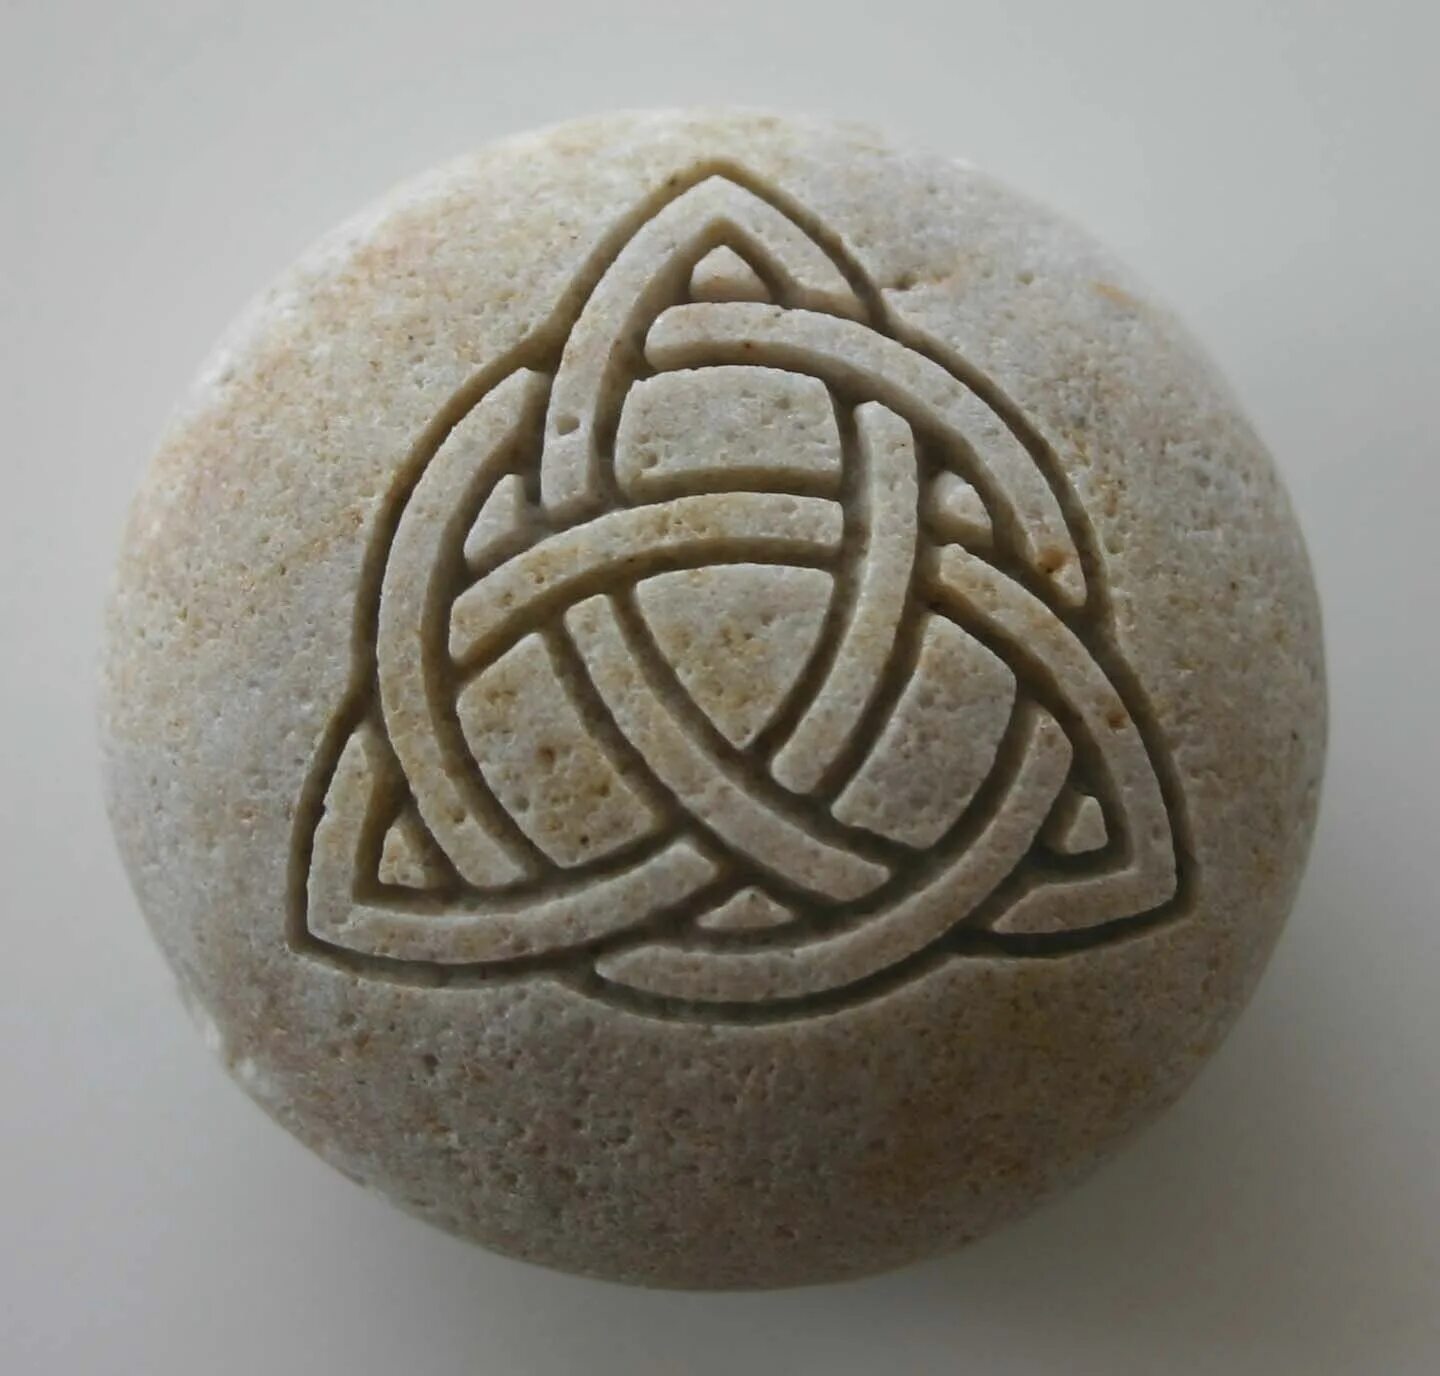 Знак stone. Орнамент на Камне. Кельтский узор на Камне. Кельтский орнамент на Камне. Символ камня.